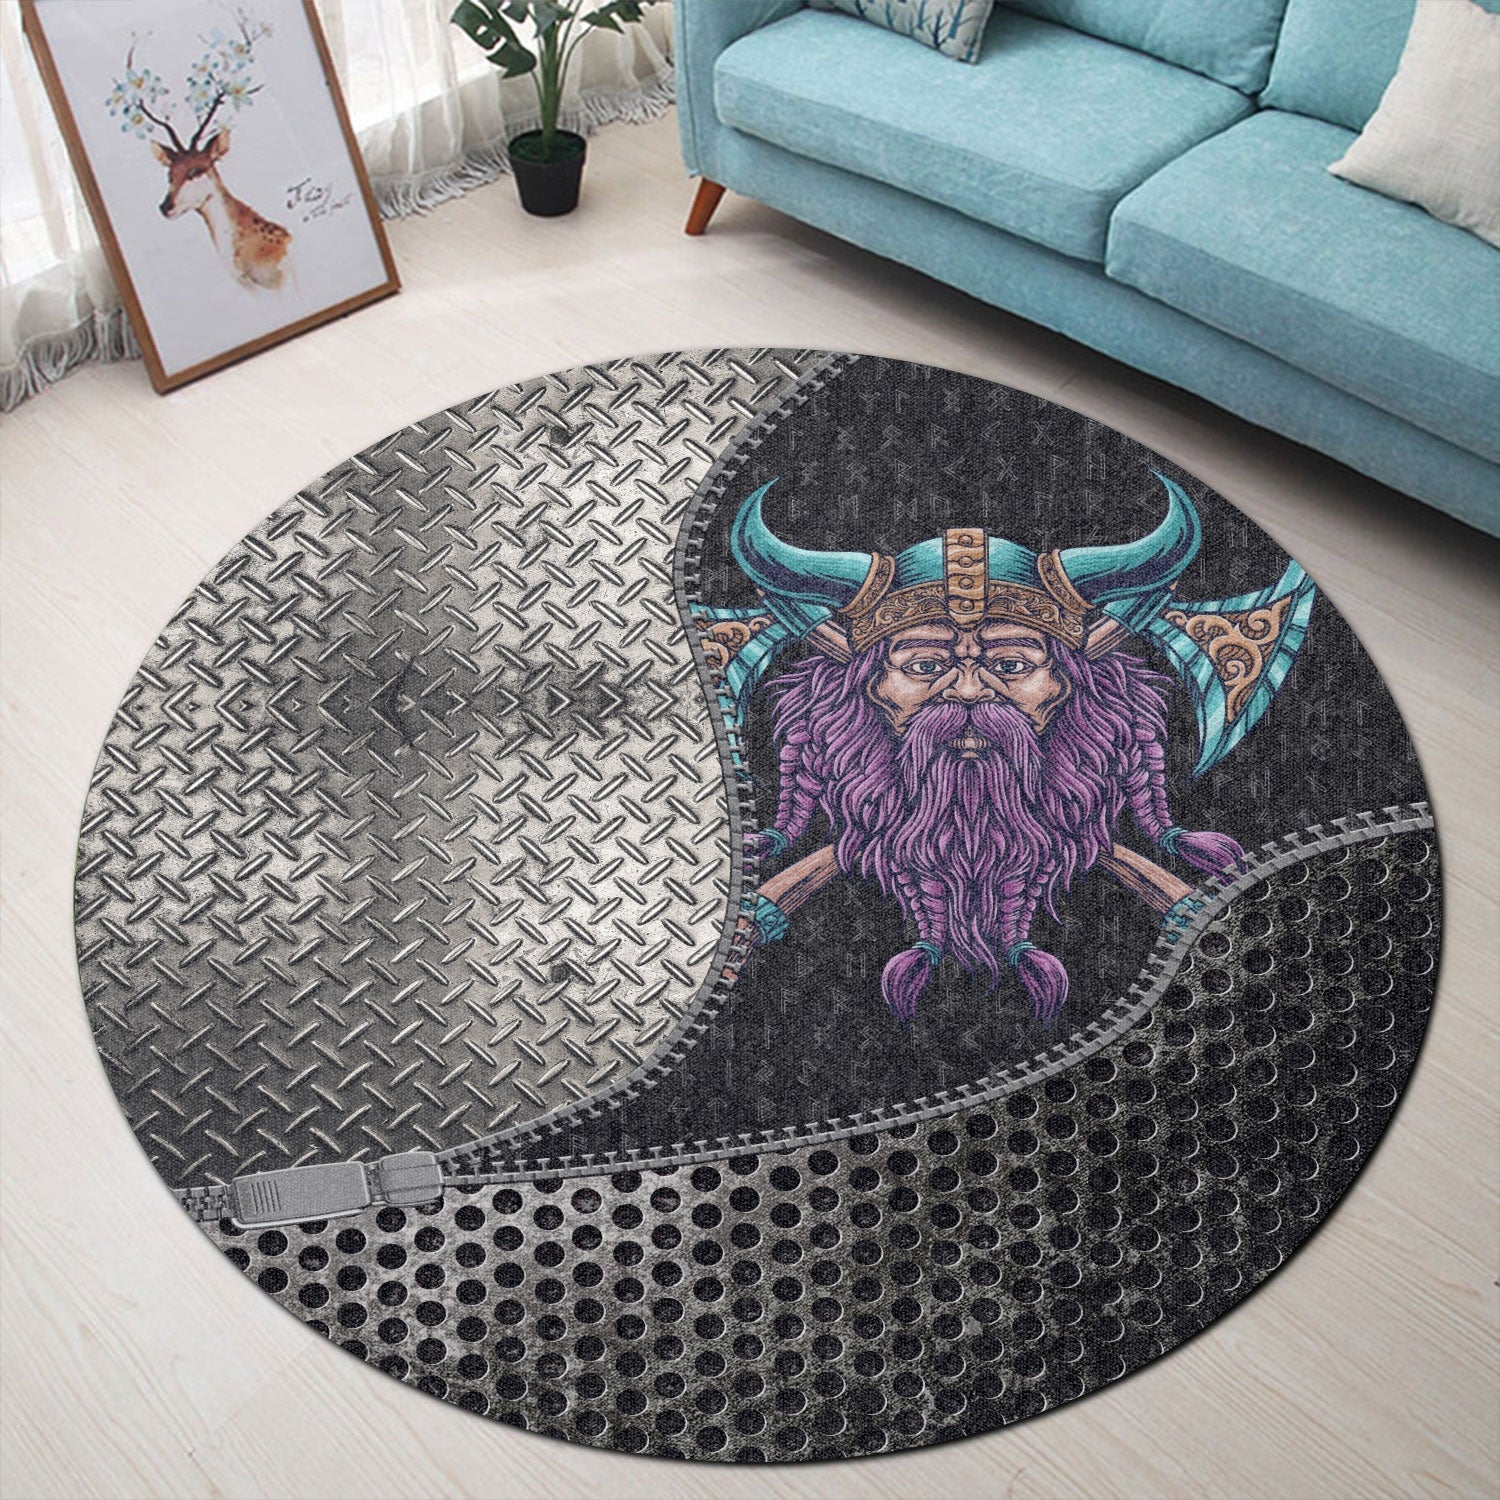 viking-carpet-cool-beard-with-axe-round-carpet